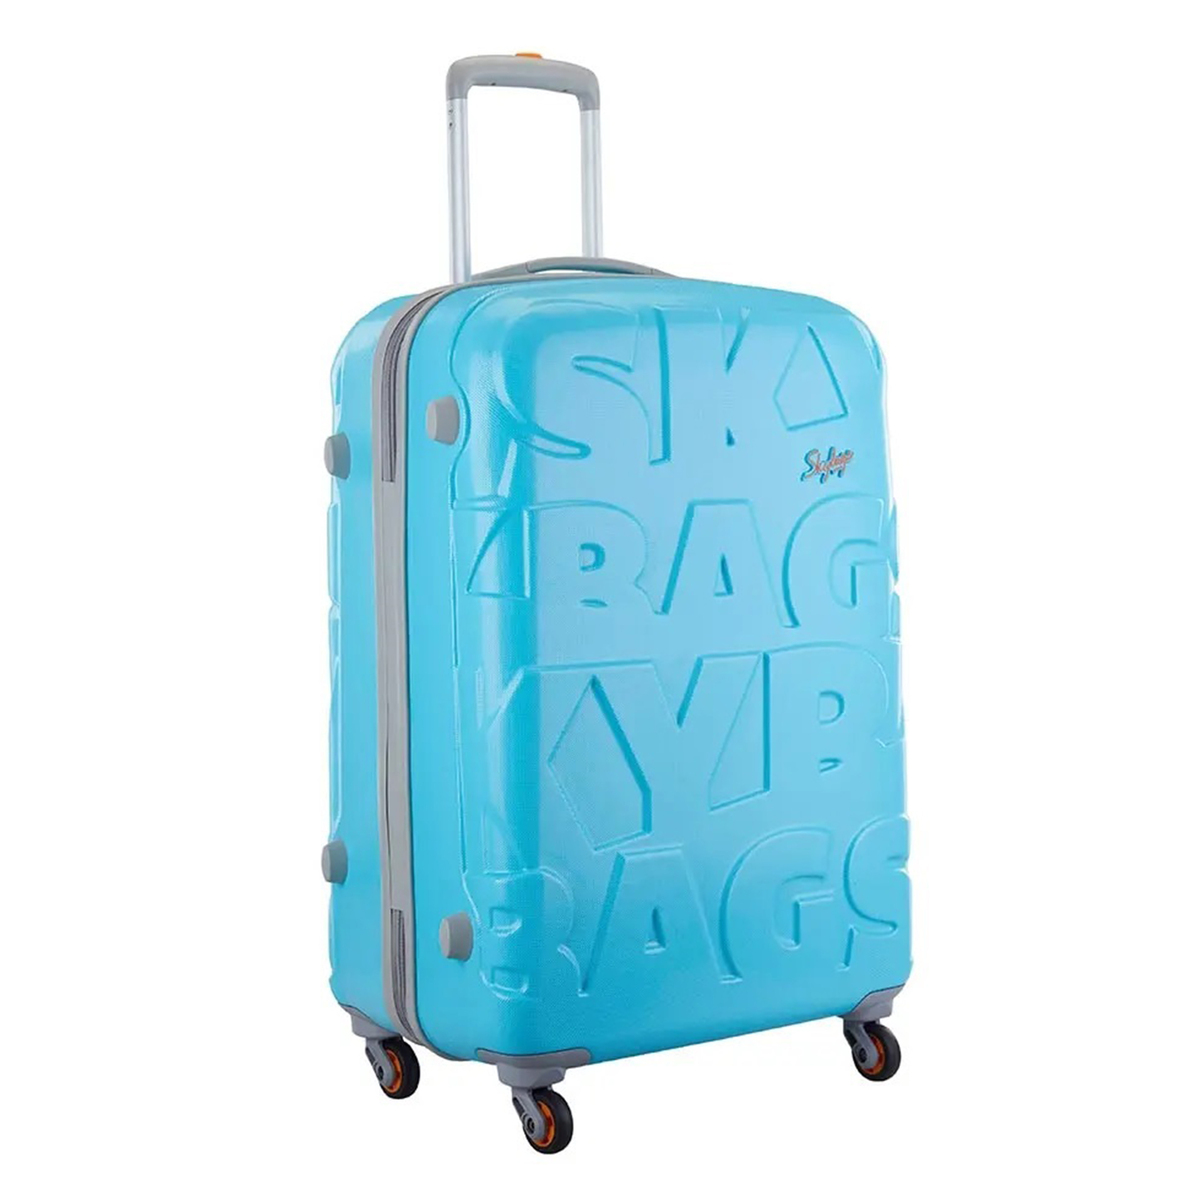 sky travel trolley bag price